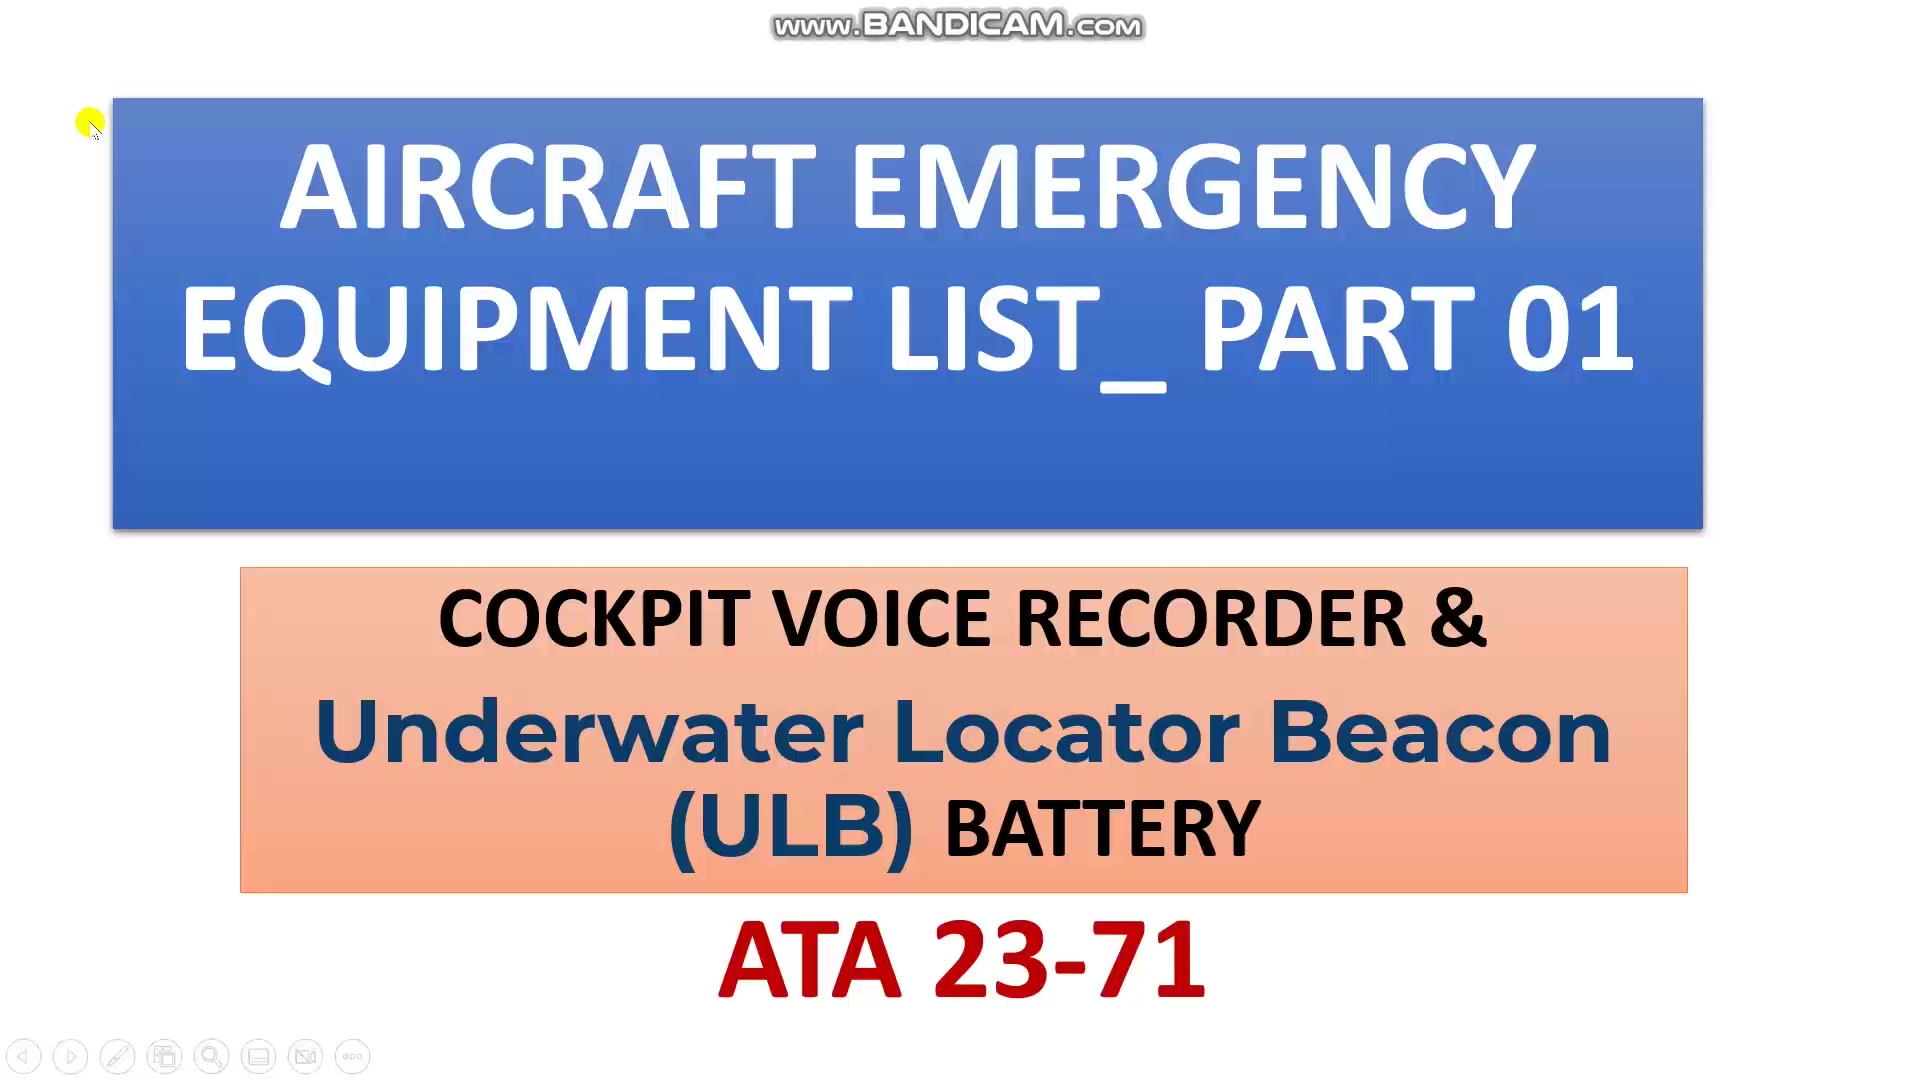 AIRCRAFT EMERGENCY EQUIPMENT PART 01 by abbas8m